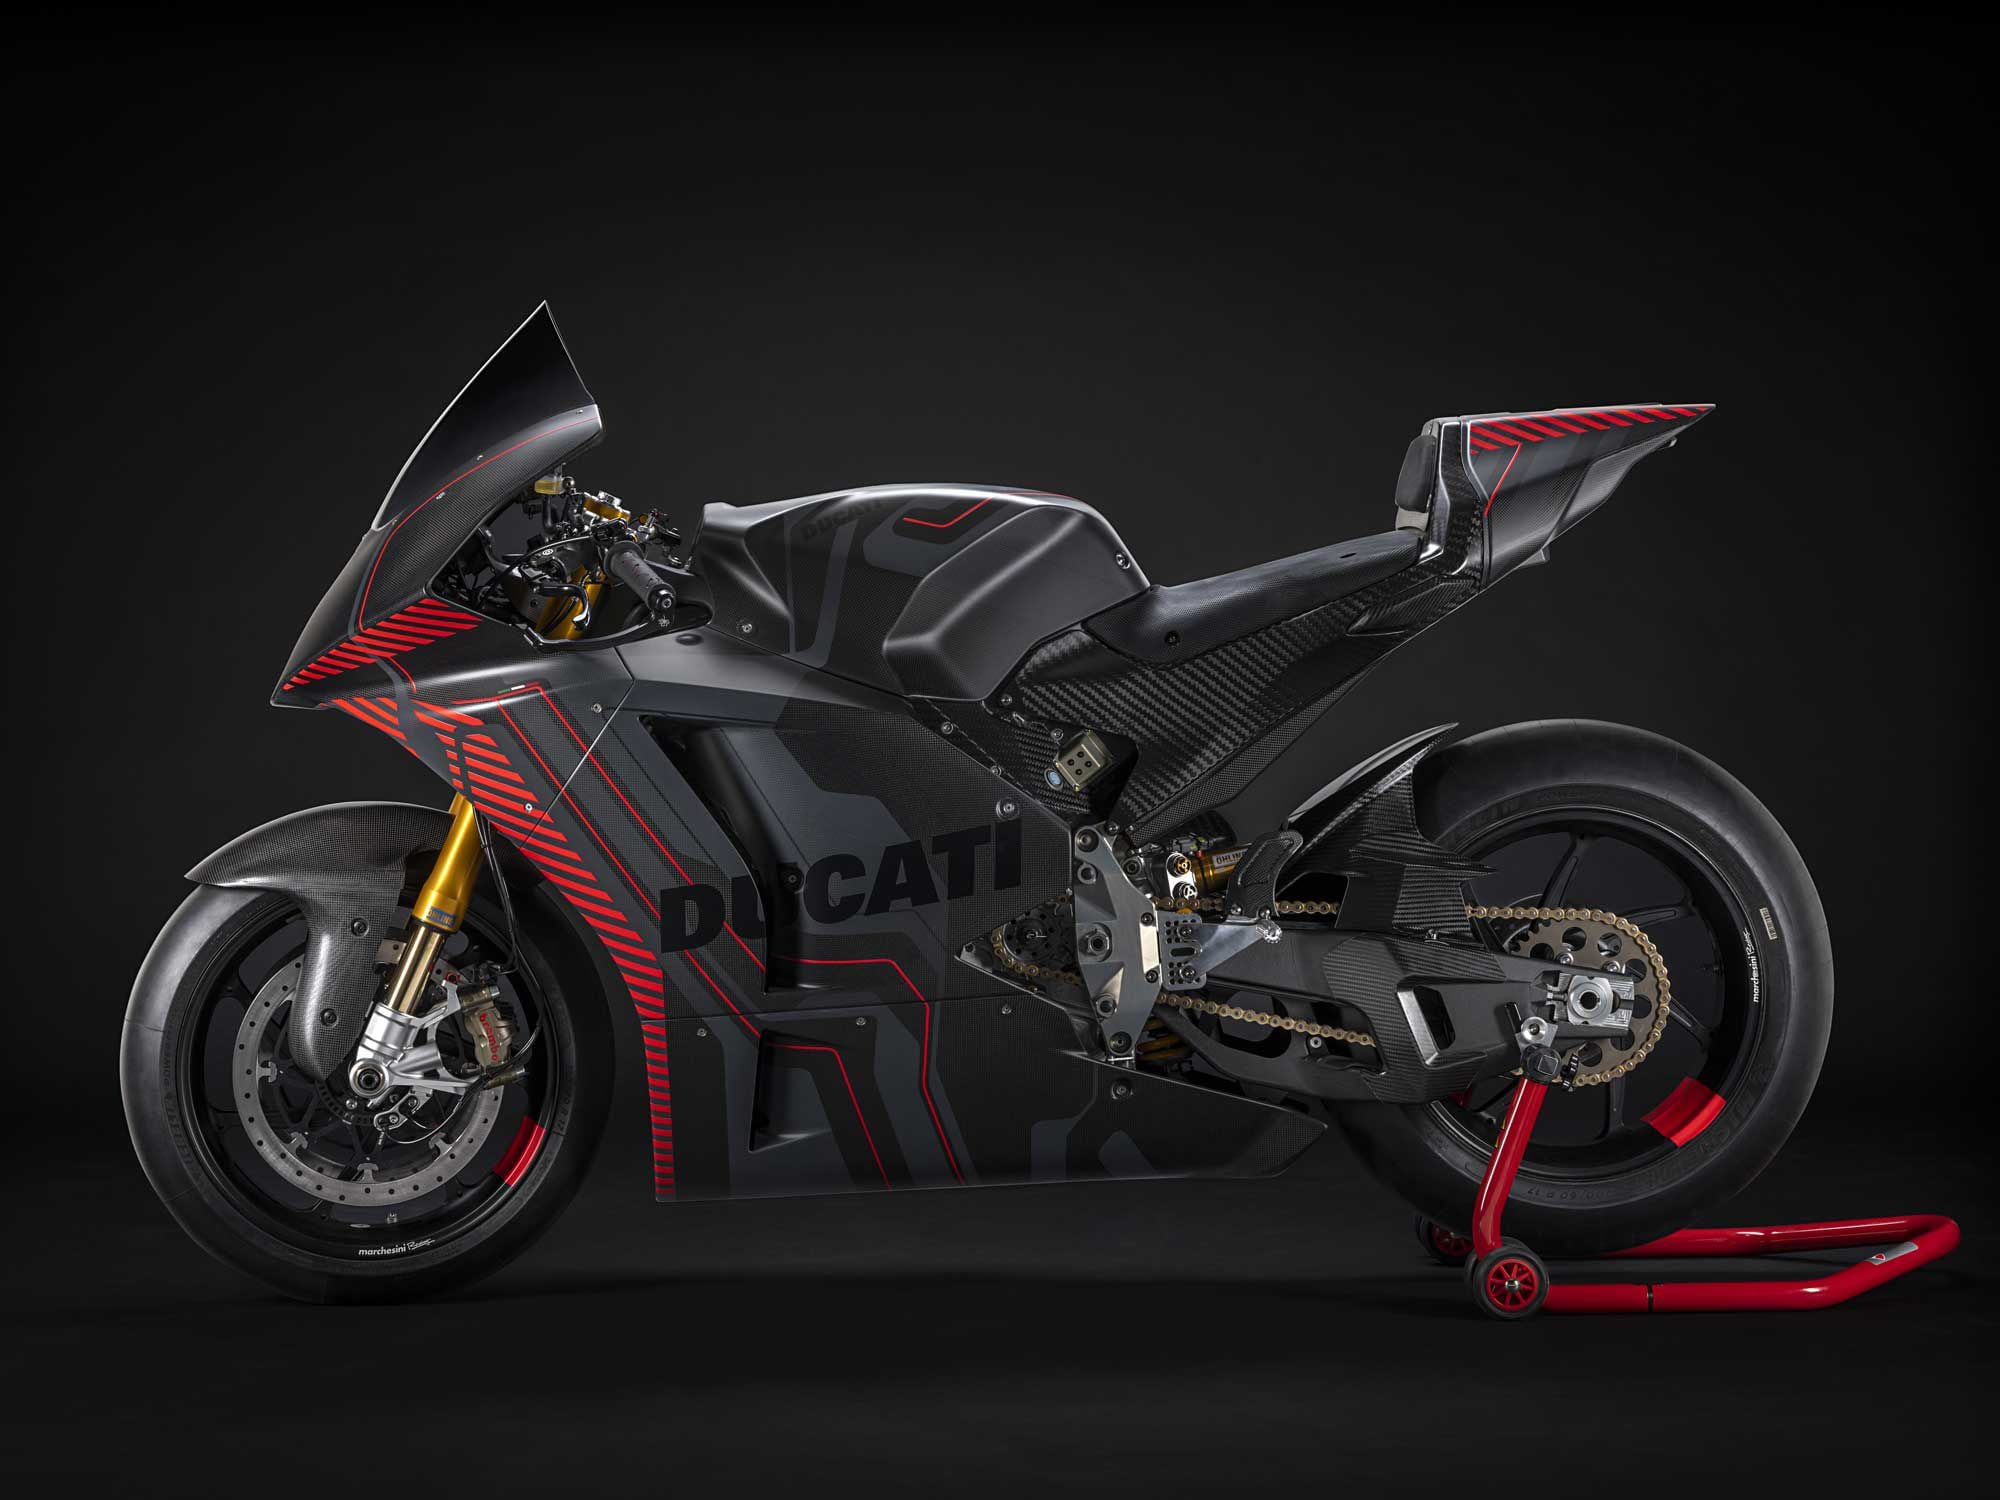 Carbon fiber, proper suspension, Brembo brakes—Ducati is taking MotoE seriously.